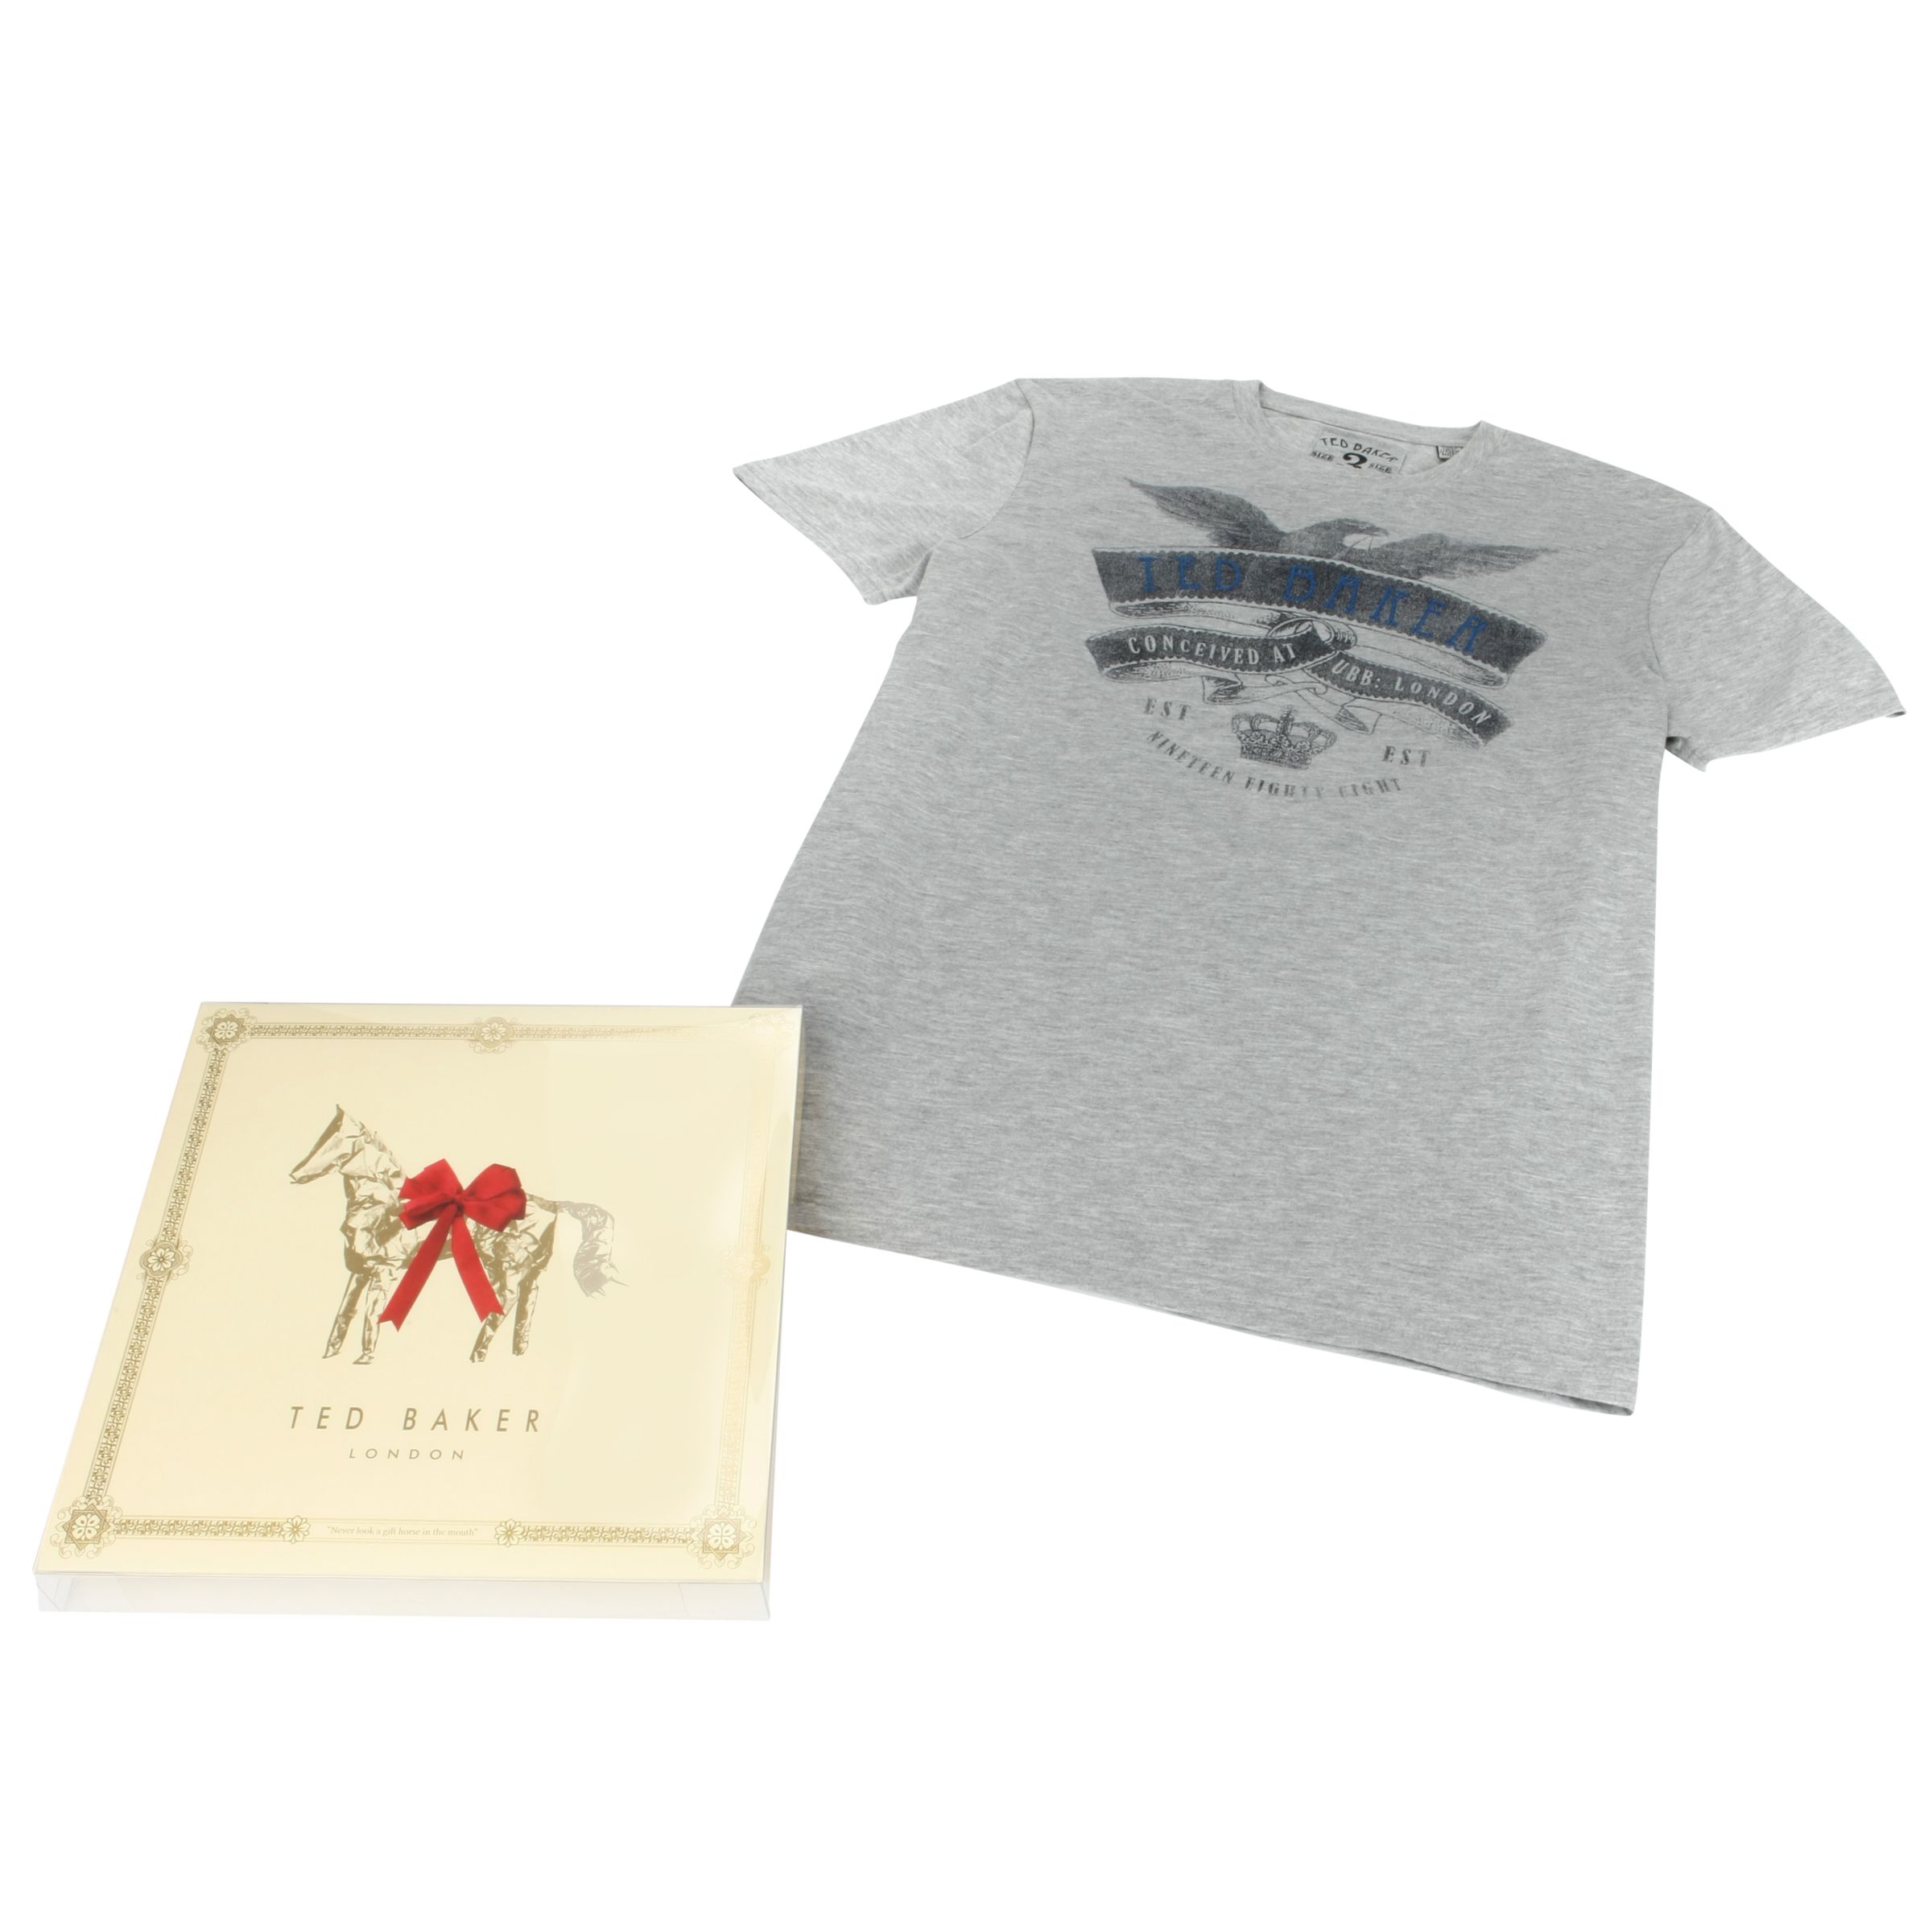 Ted Baker T-Shirt Gift Set, Grey